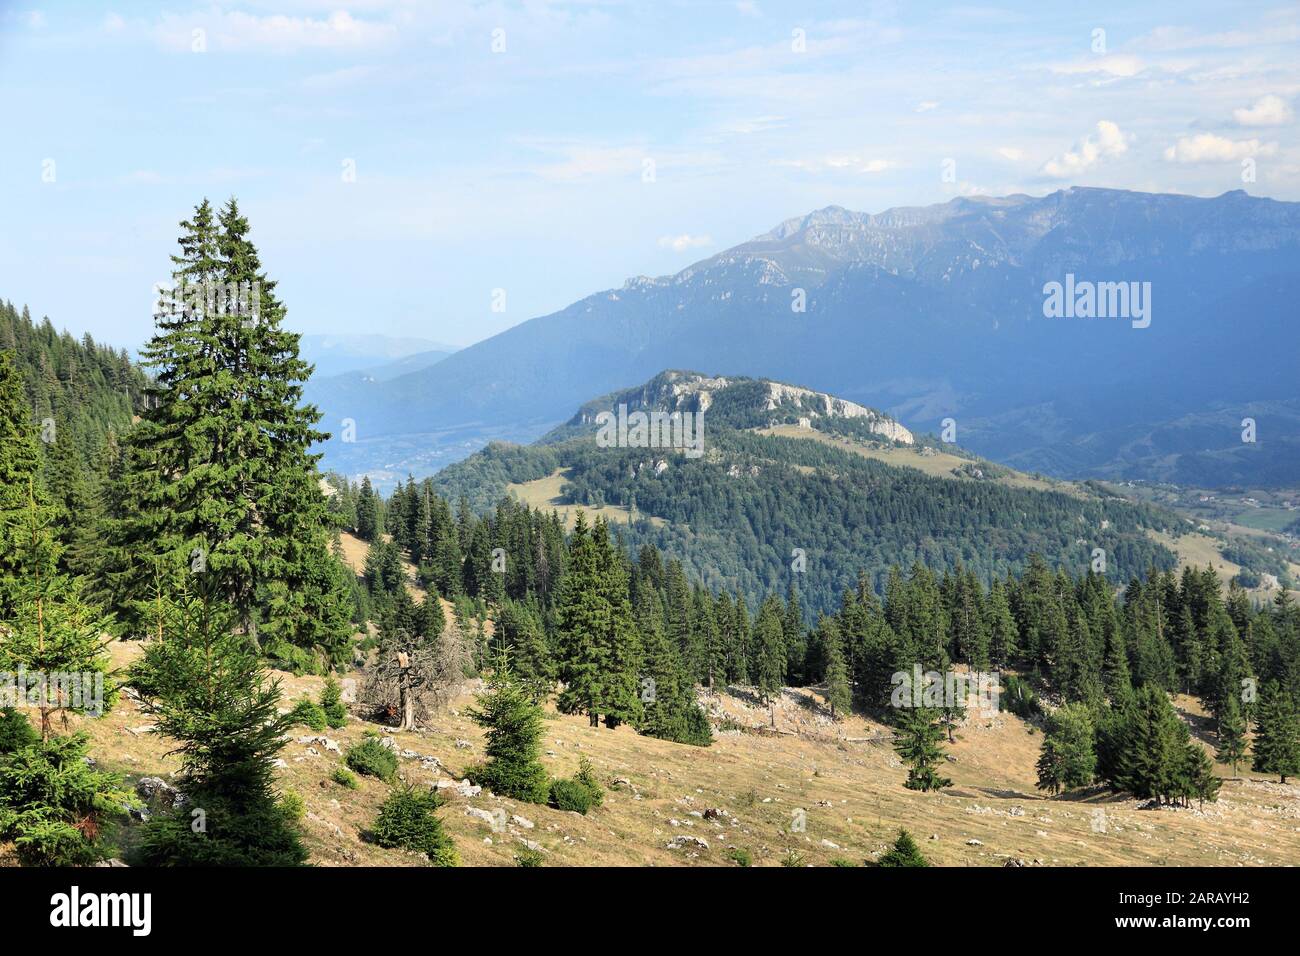 Romania mountain landscape. Piatra Craiului National Park. High altitude forest of Mugo Pine (Pinus mugo). Stock Photo